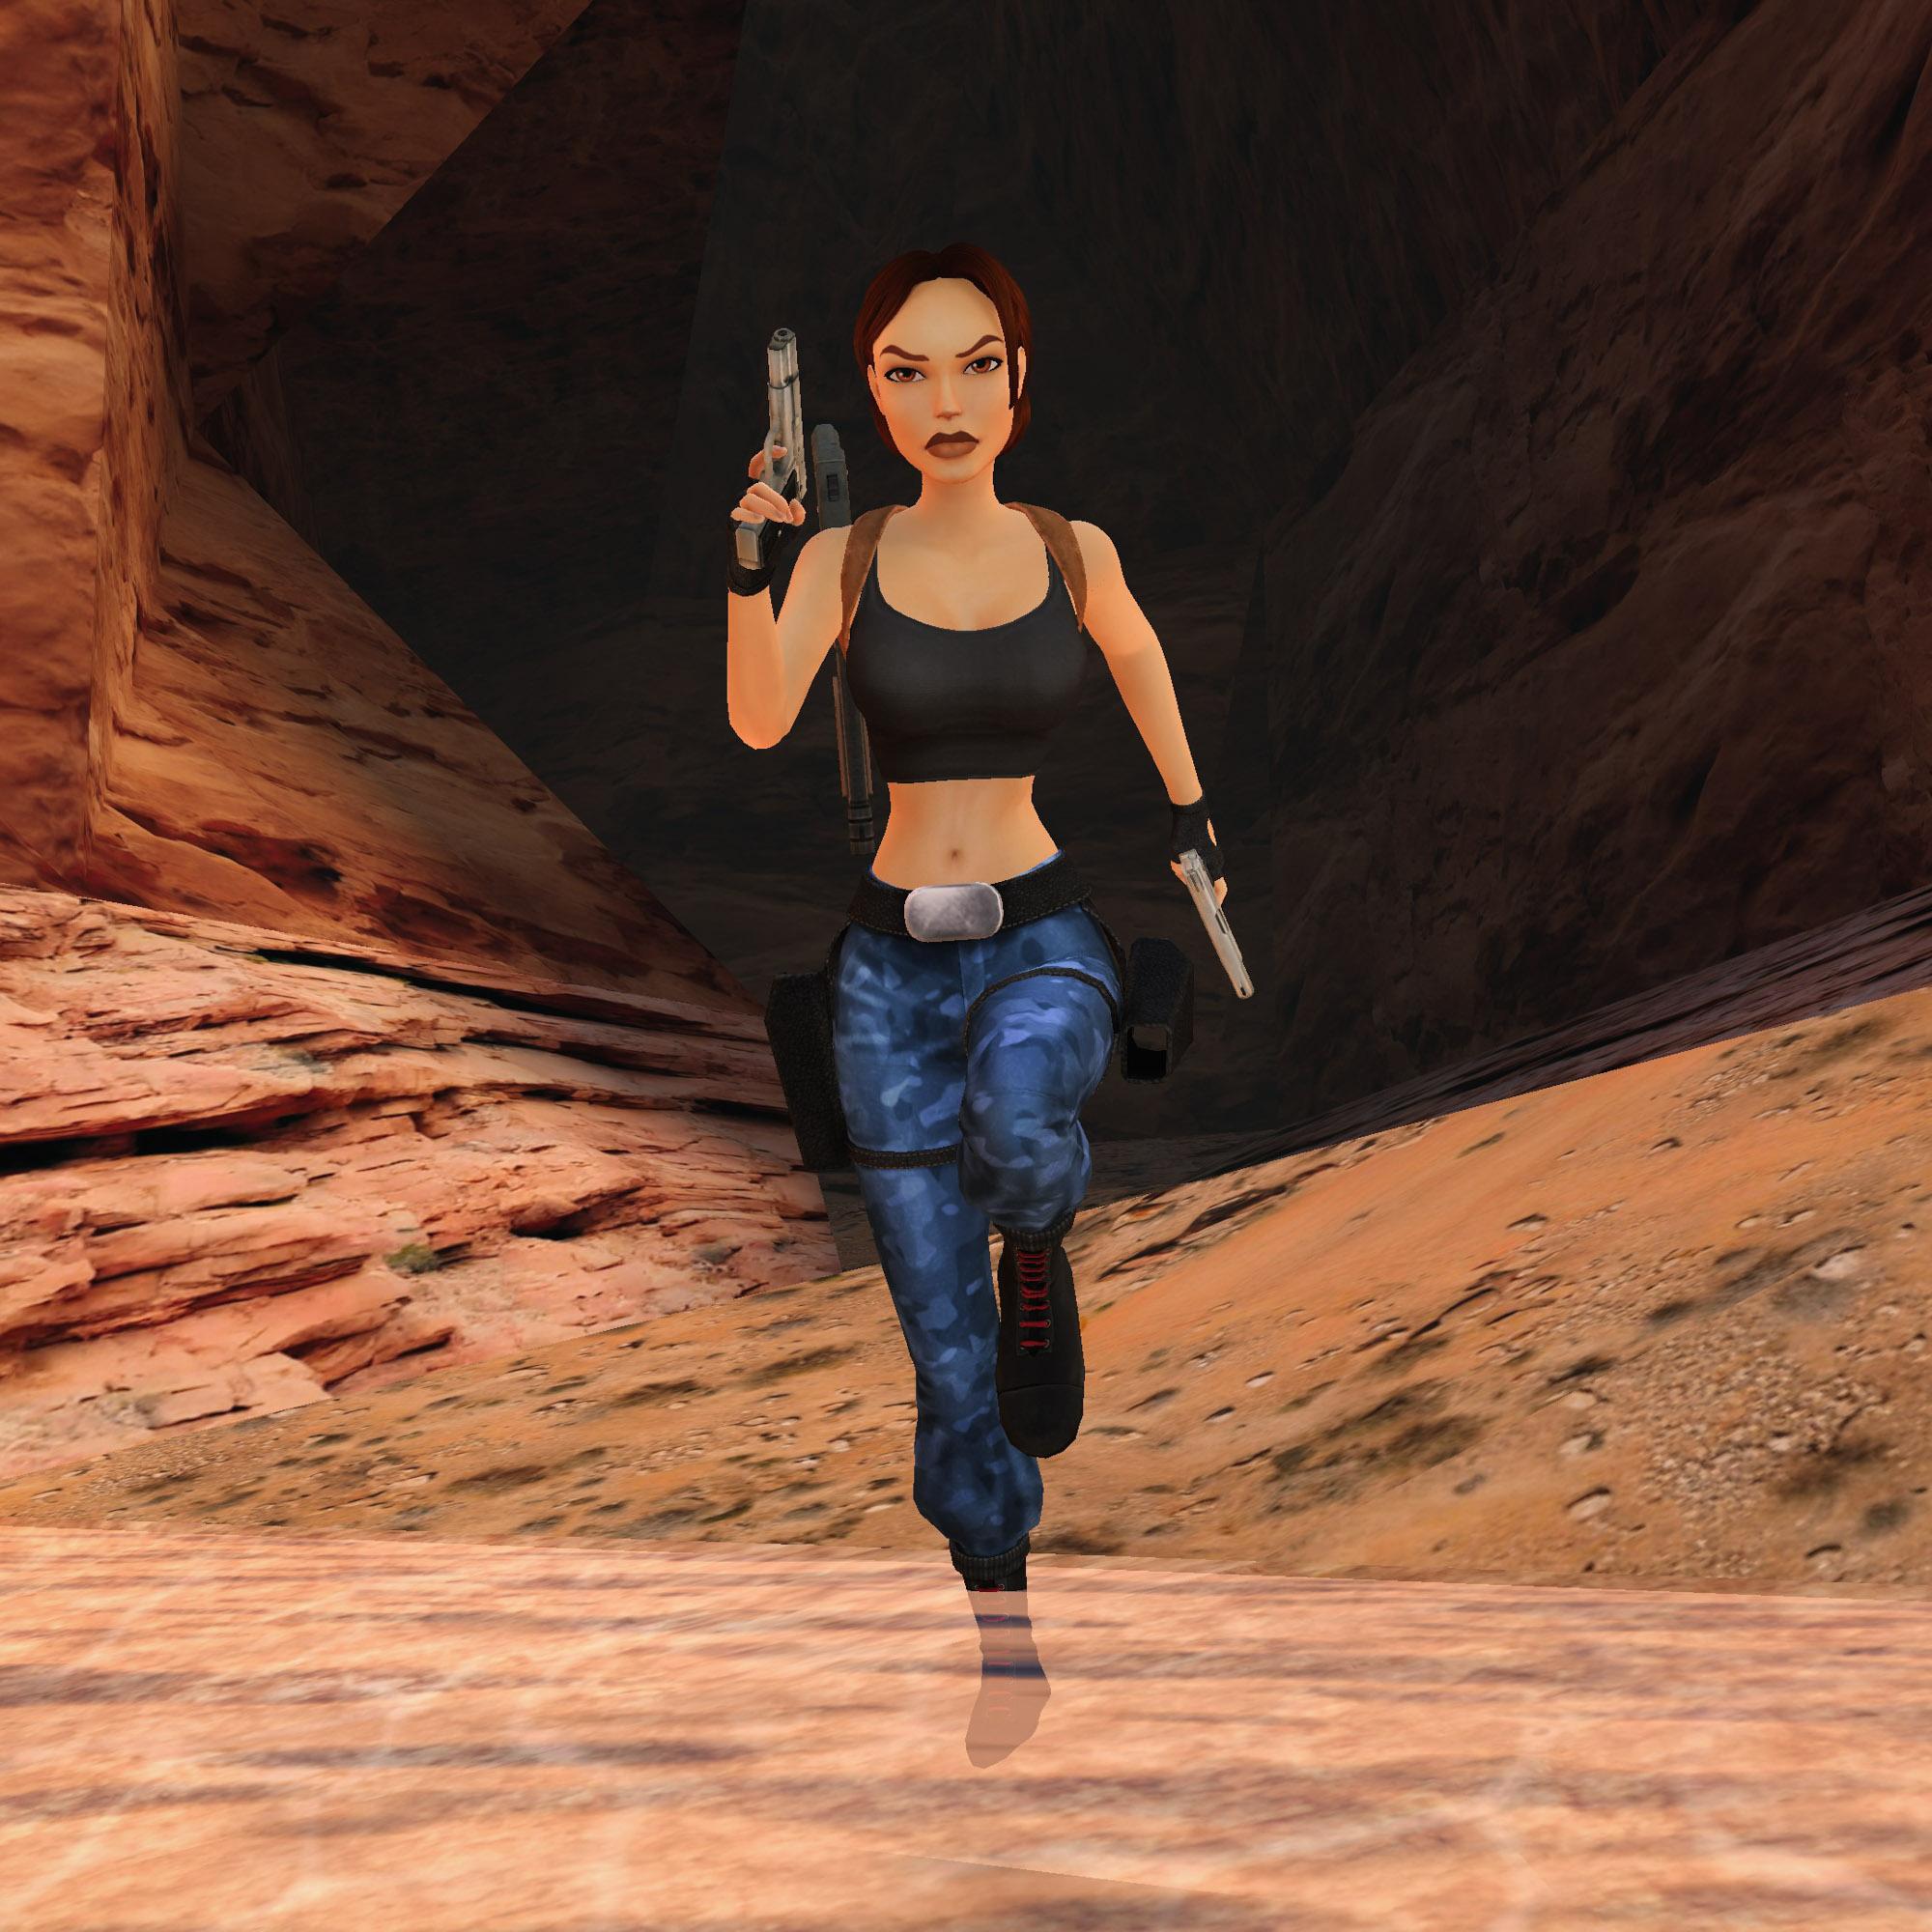 Lara Croft running whilst holding her dual pistols in Nevada.